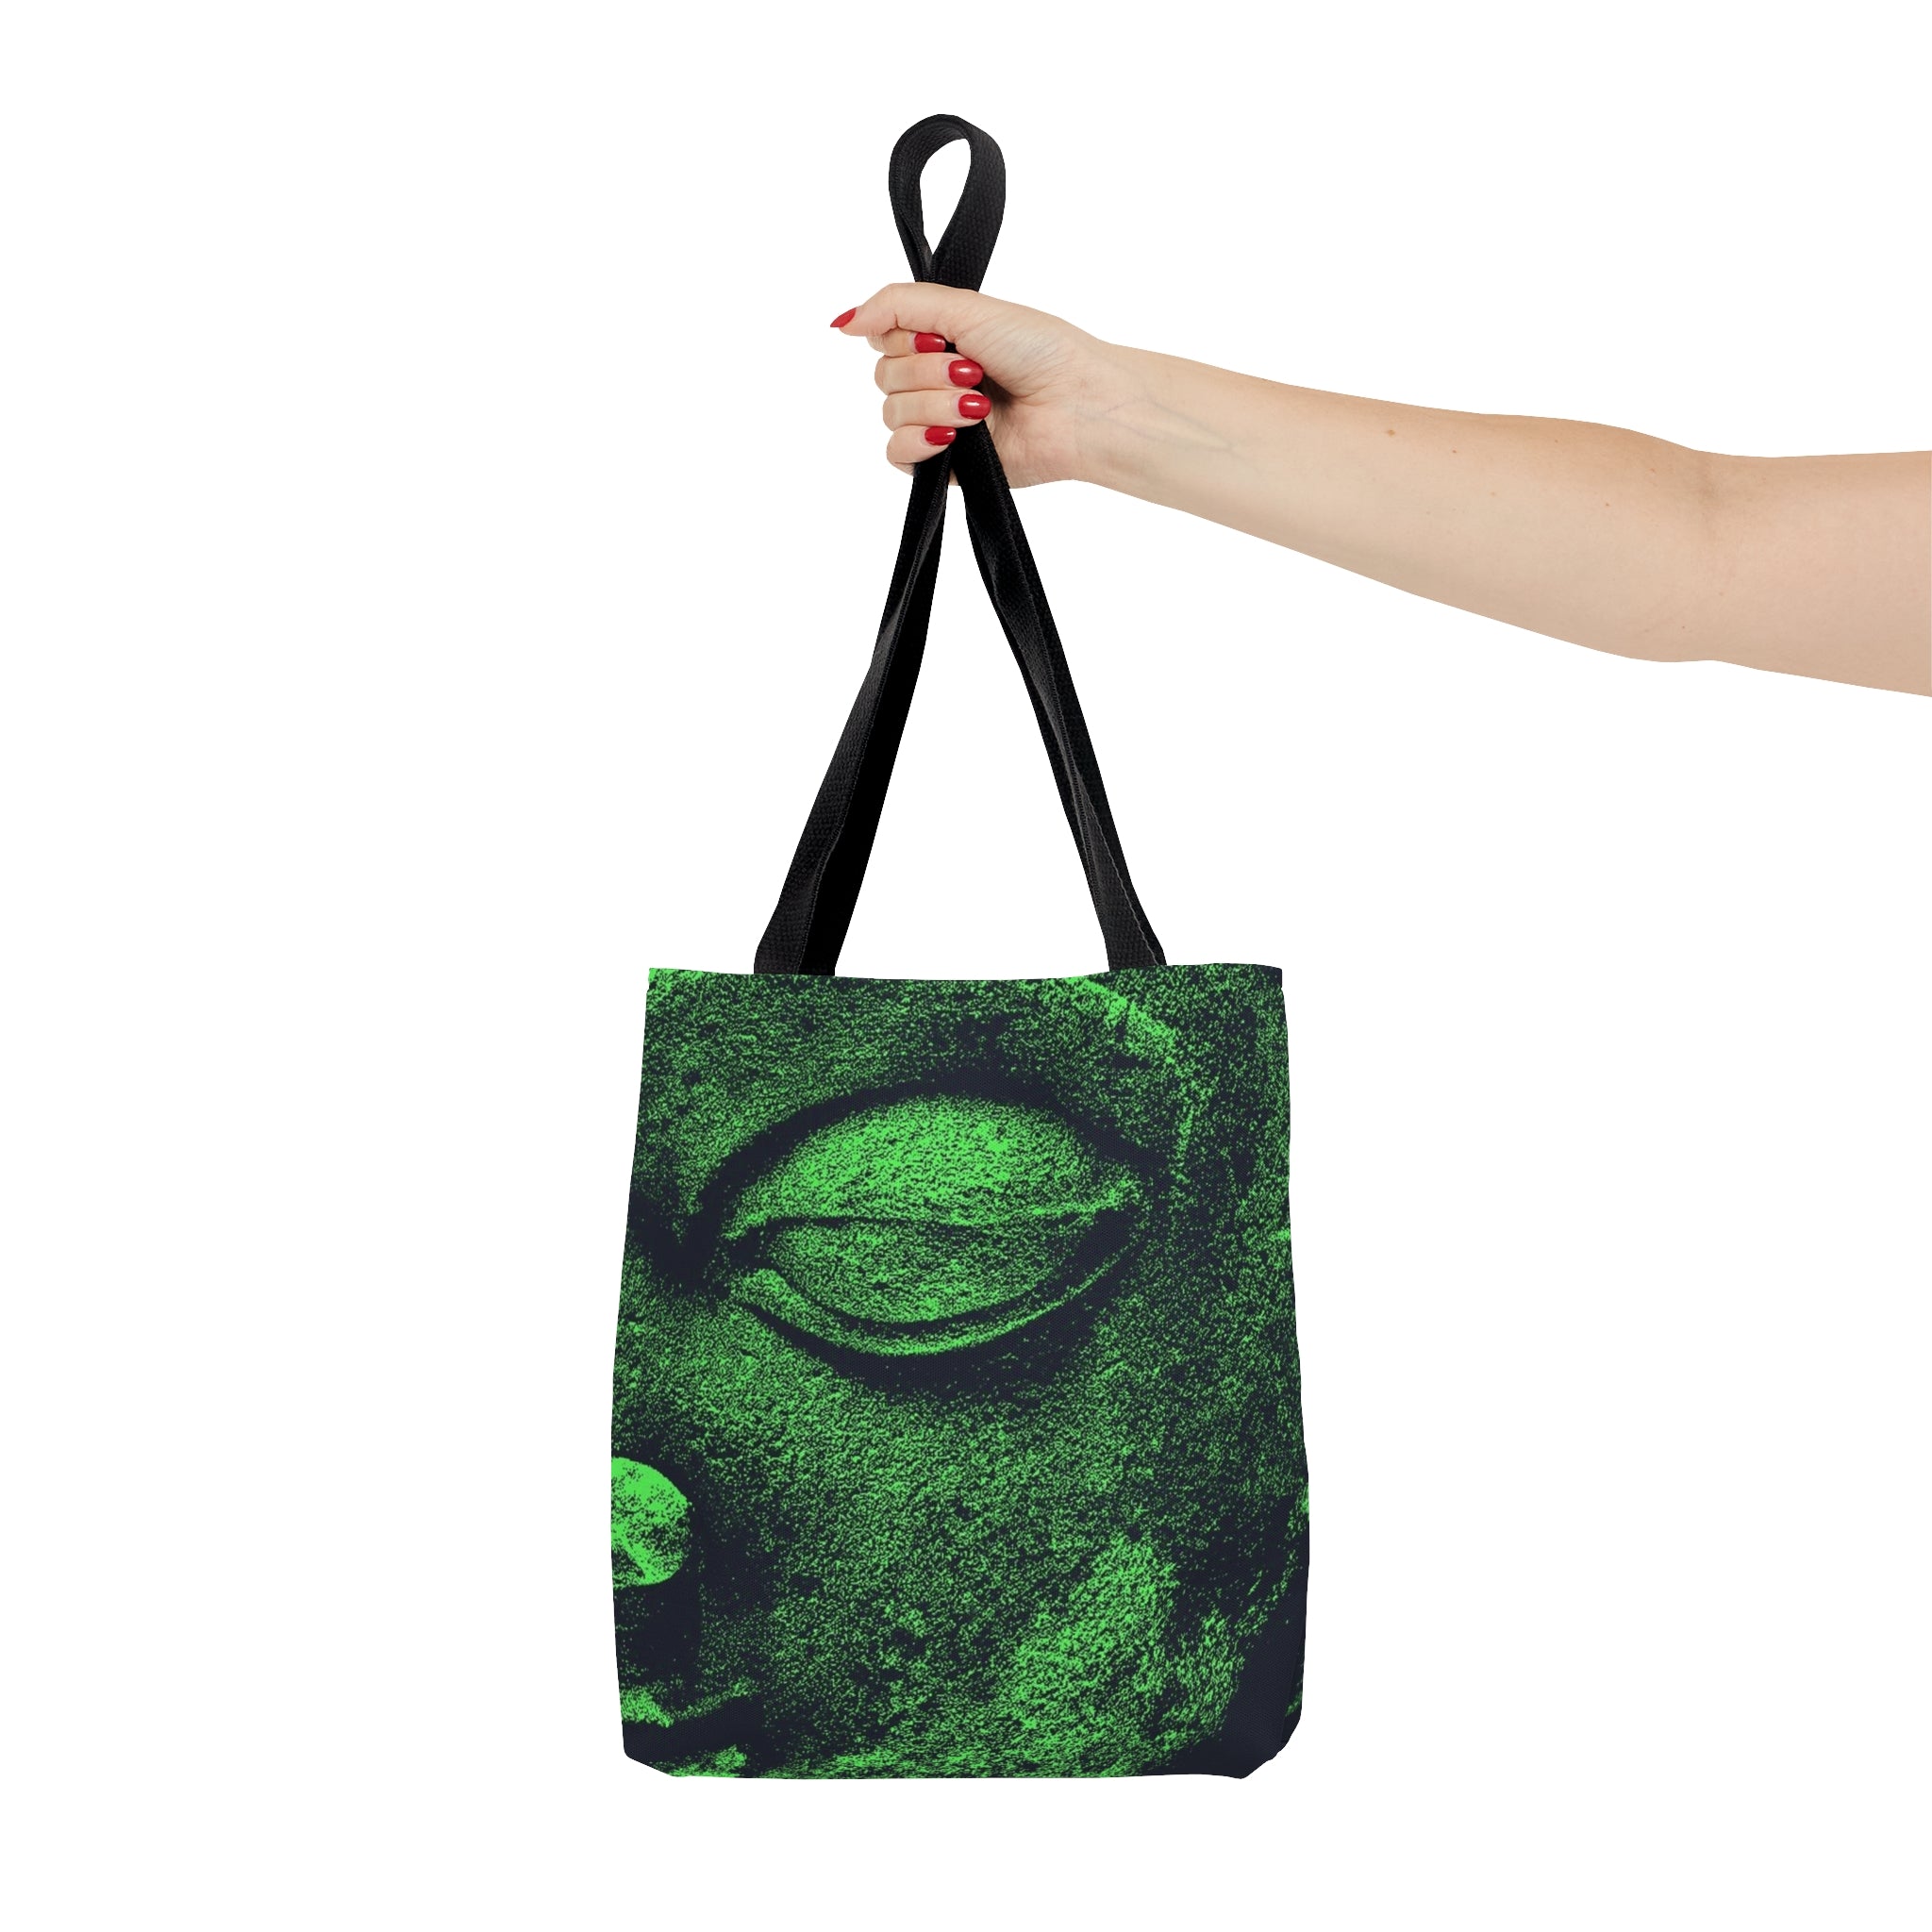 Bags Buddha bag optic green